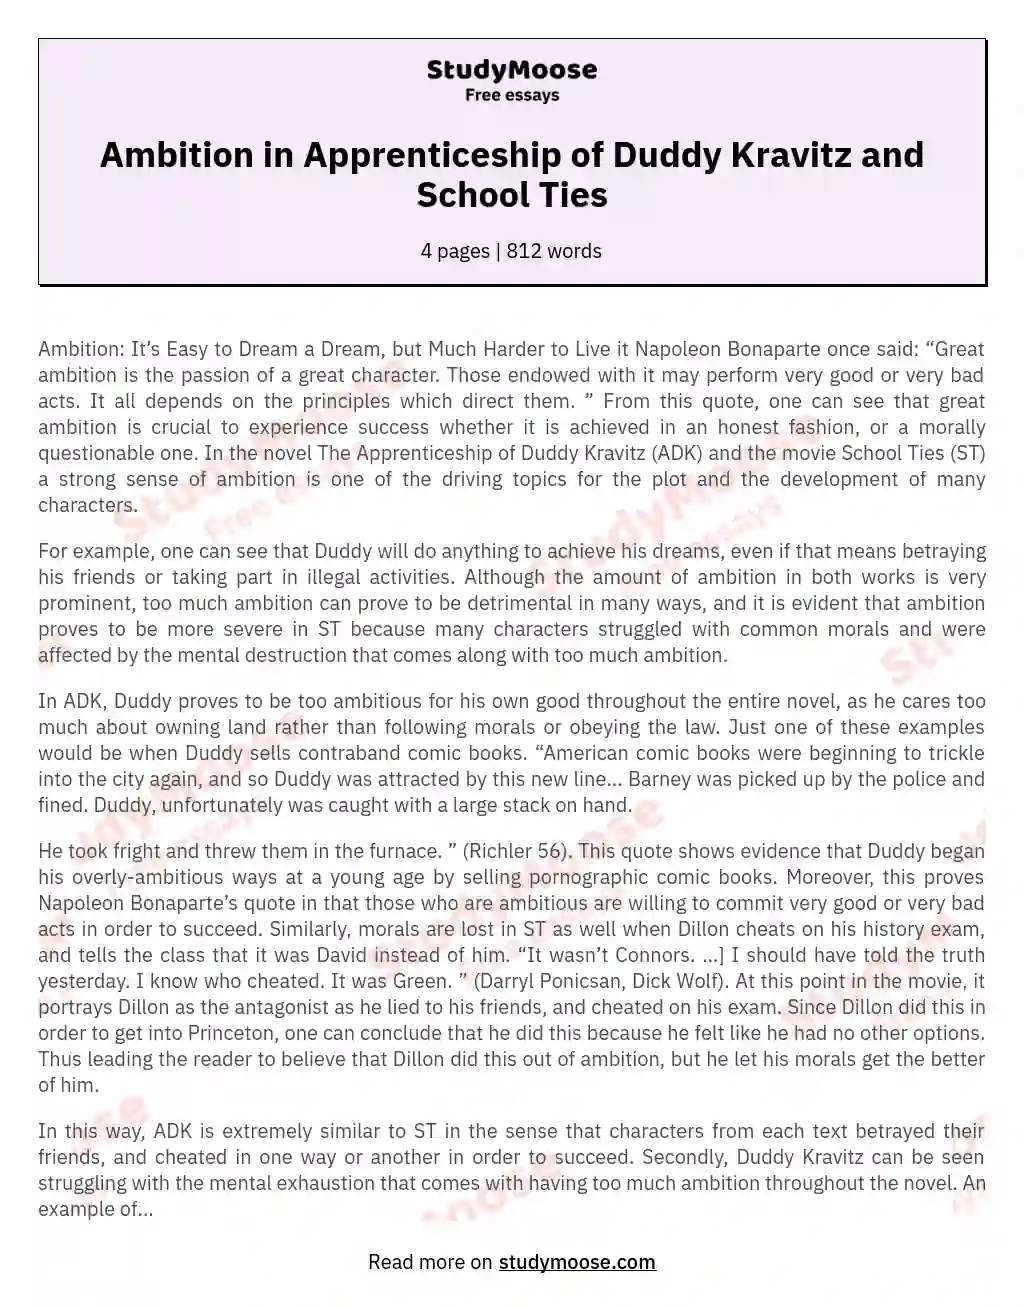 Ambition in Apprenticeship of Duddy Kravitz and School Ties